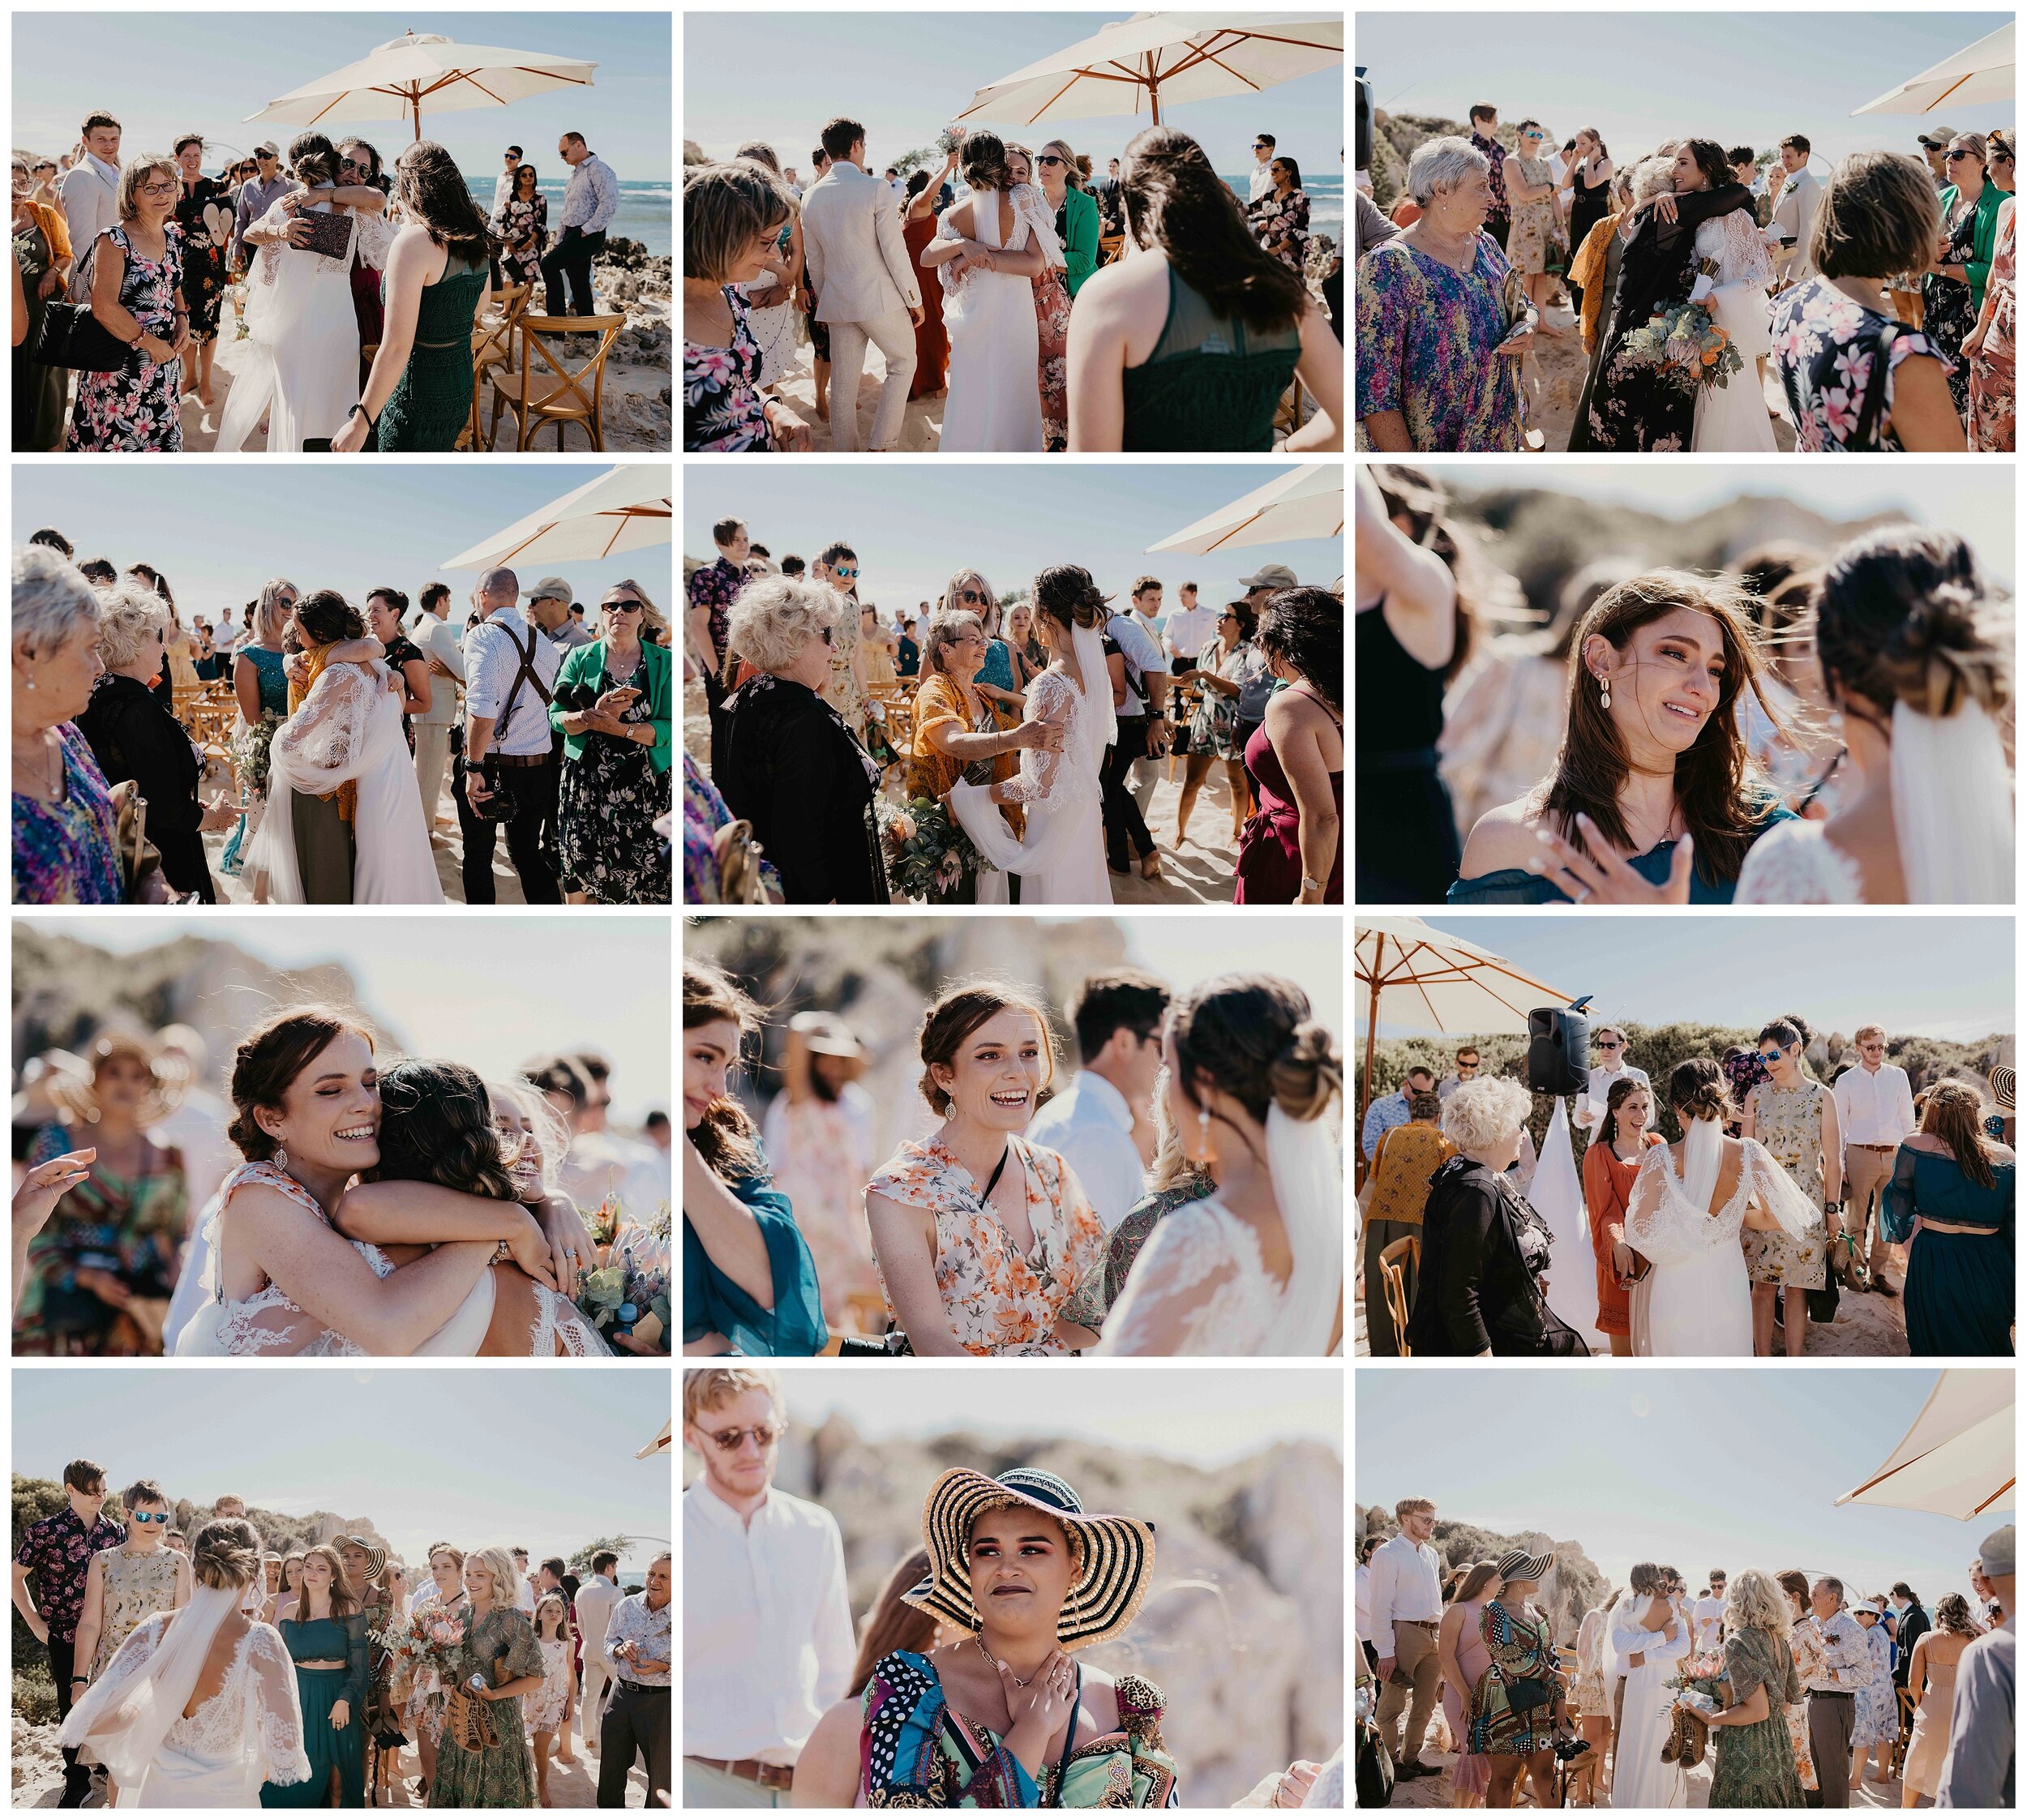 trigg beach wedding amy skinner photography-360.jpg